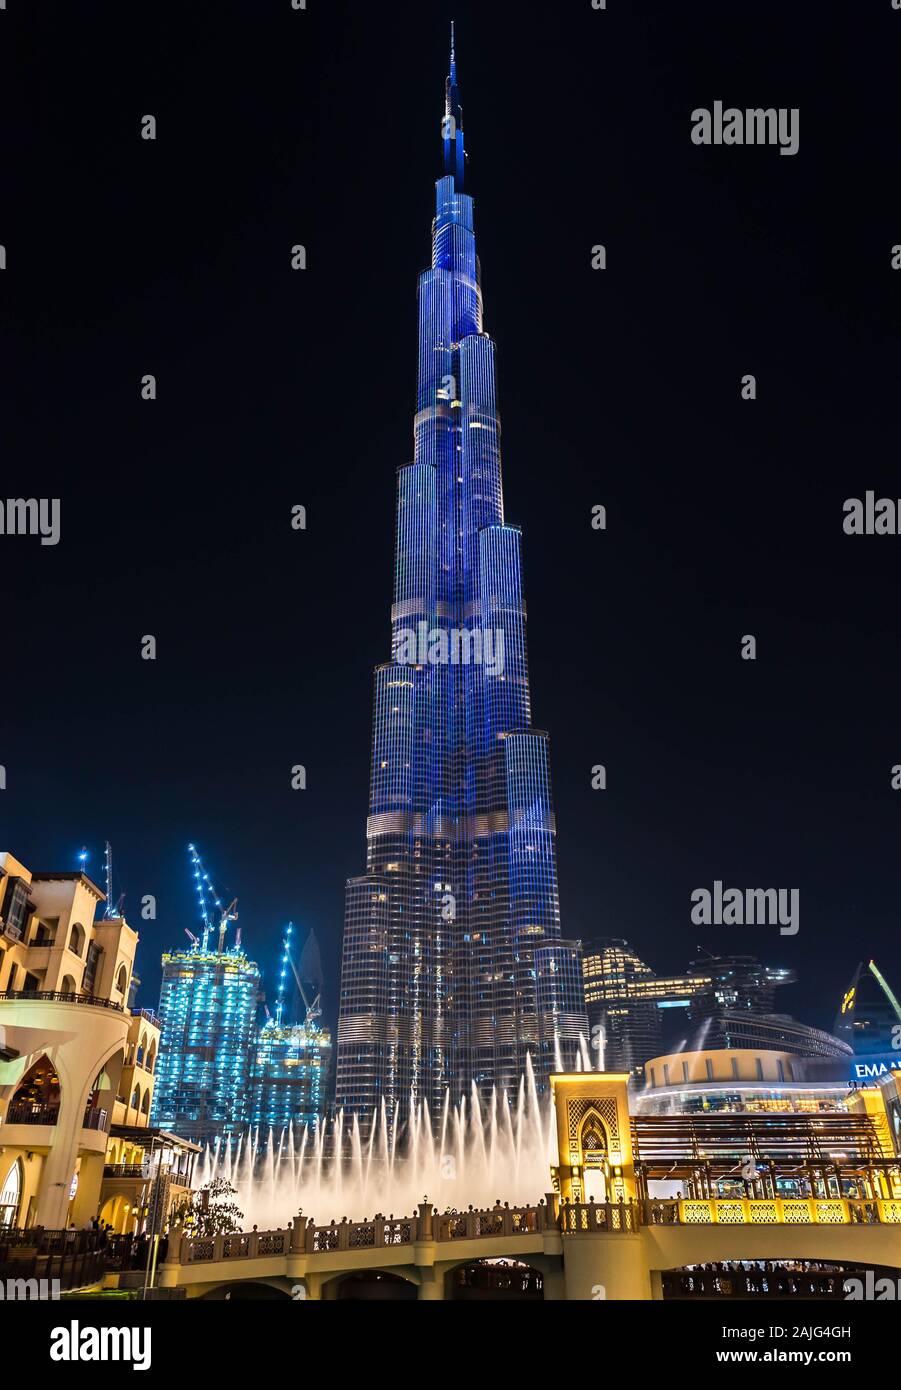 Dubai, United Arab Emirates: Amazing futuristic light show on the Burj Khalifa, the tallest building skyscraper in the world, illuminated by night Stock Photo